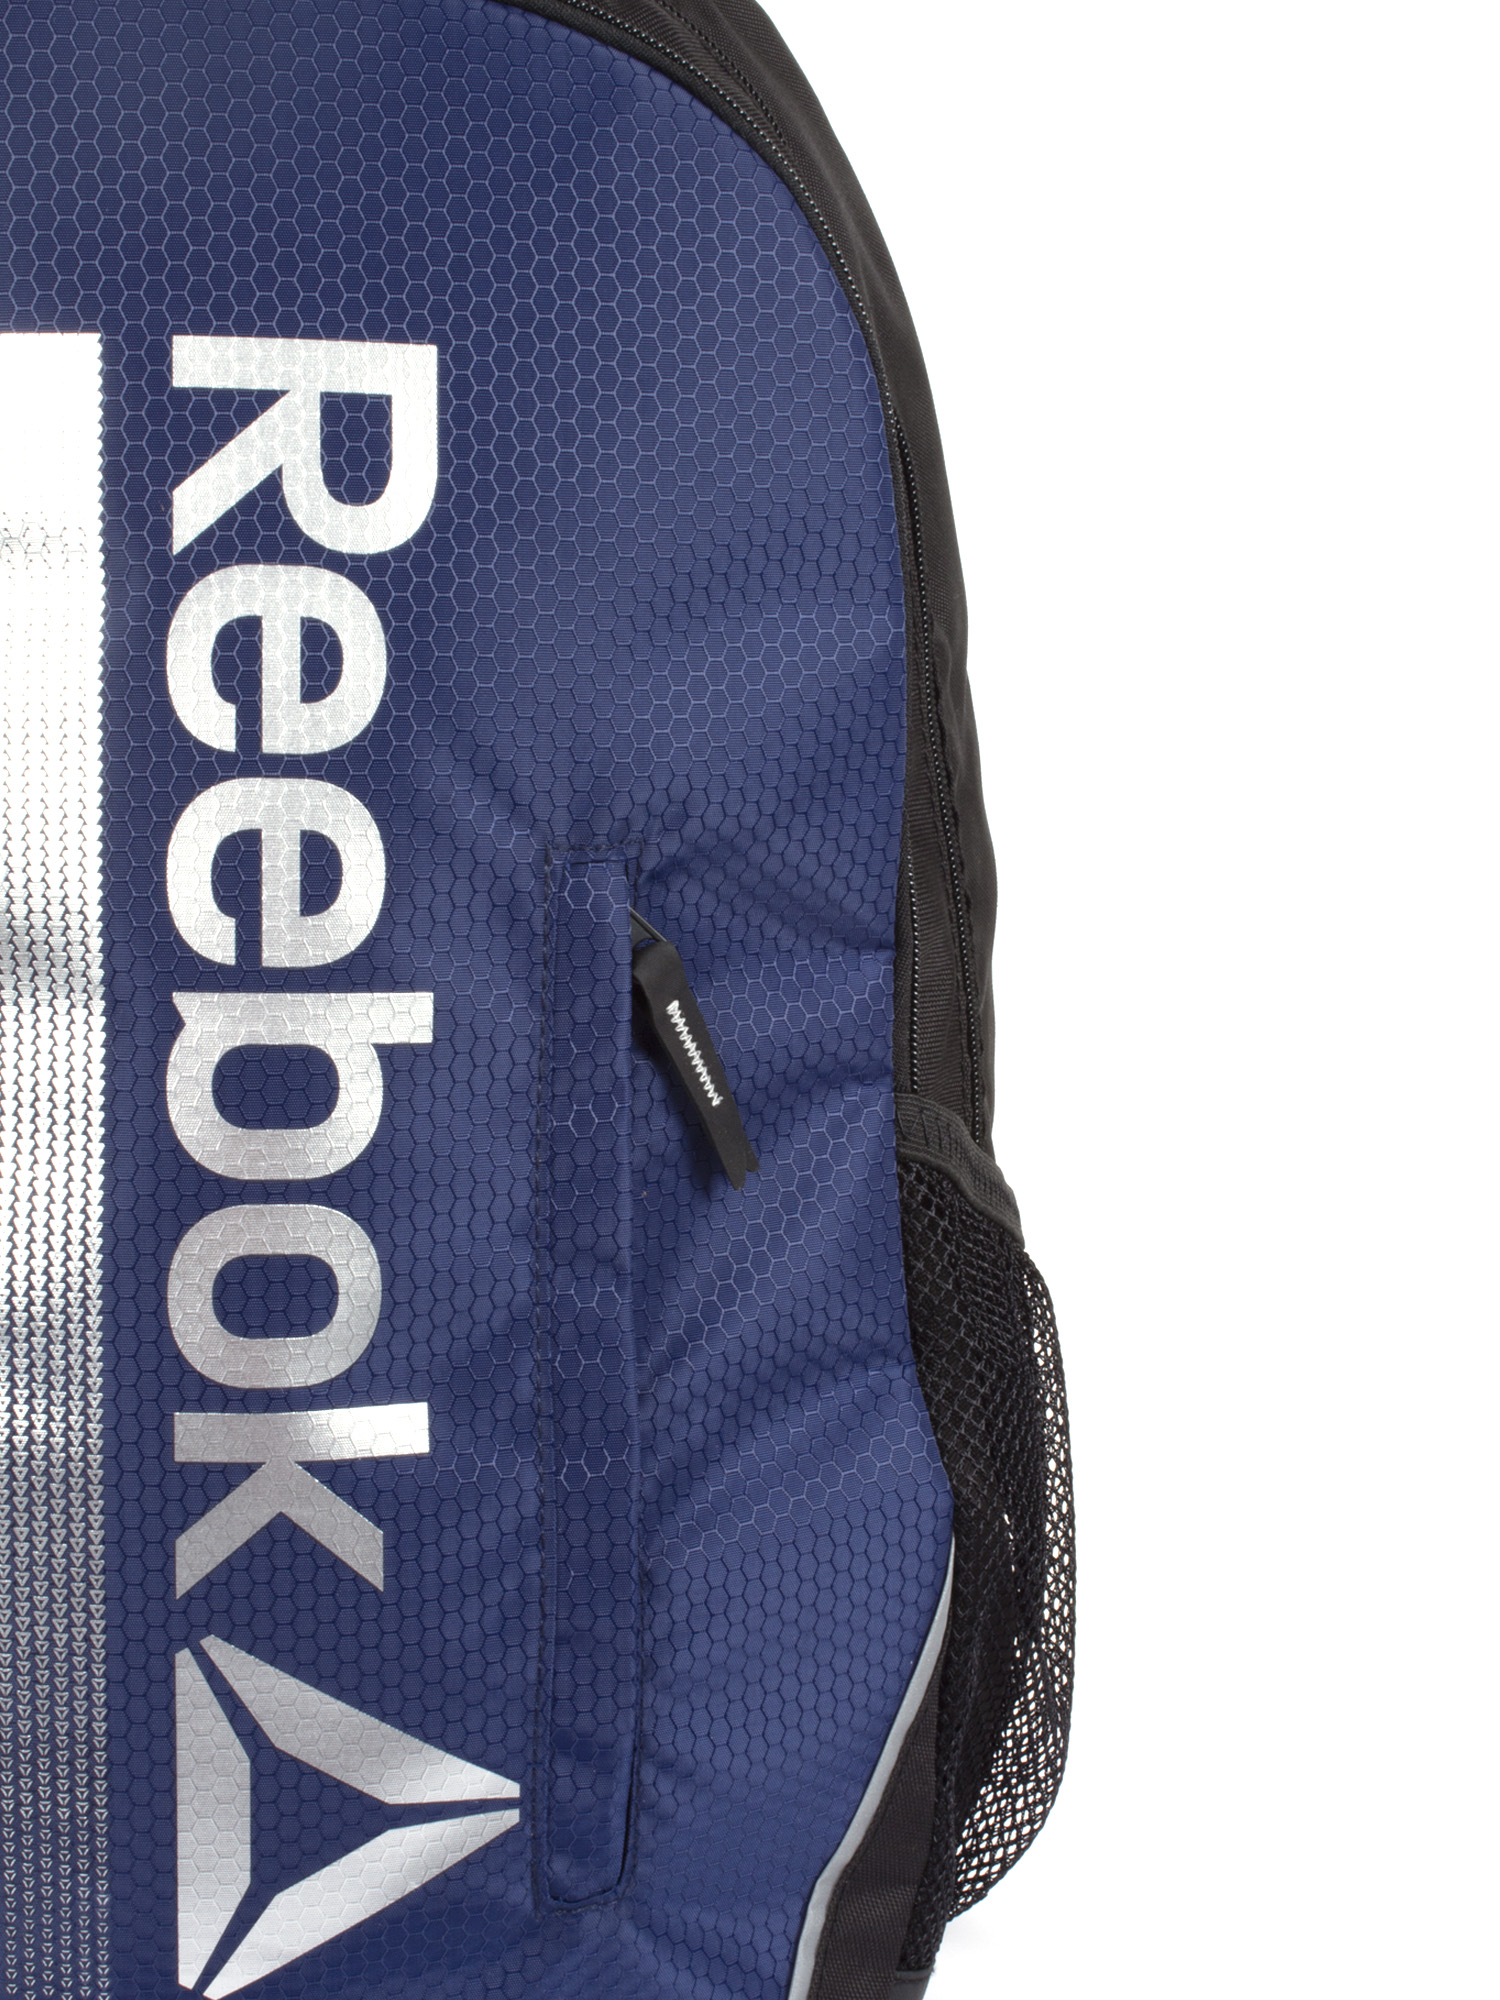 Reebok Trainer Navy Backpack - image 2 of 2